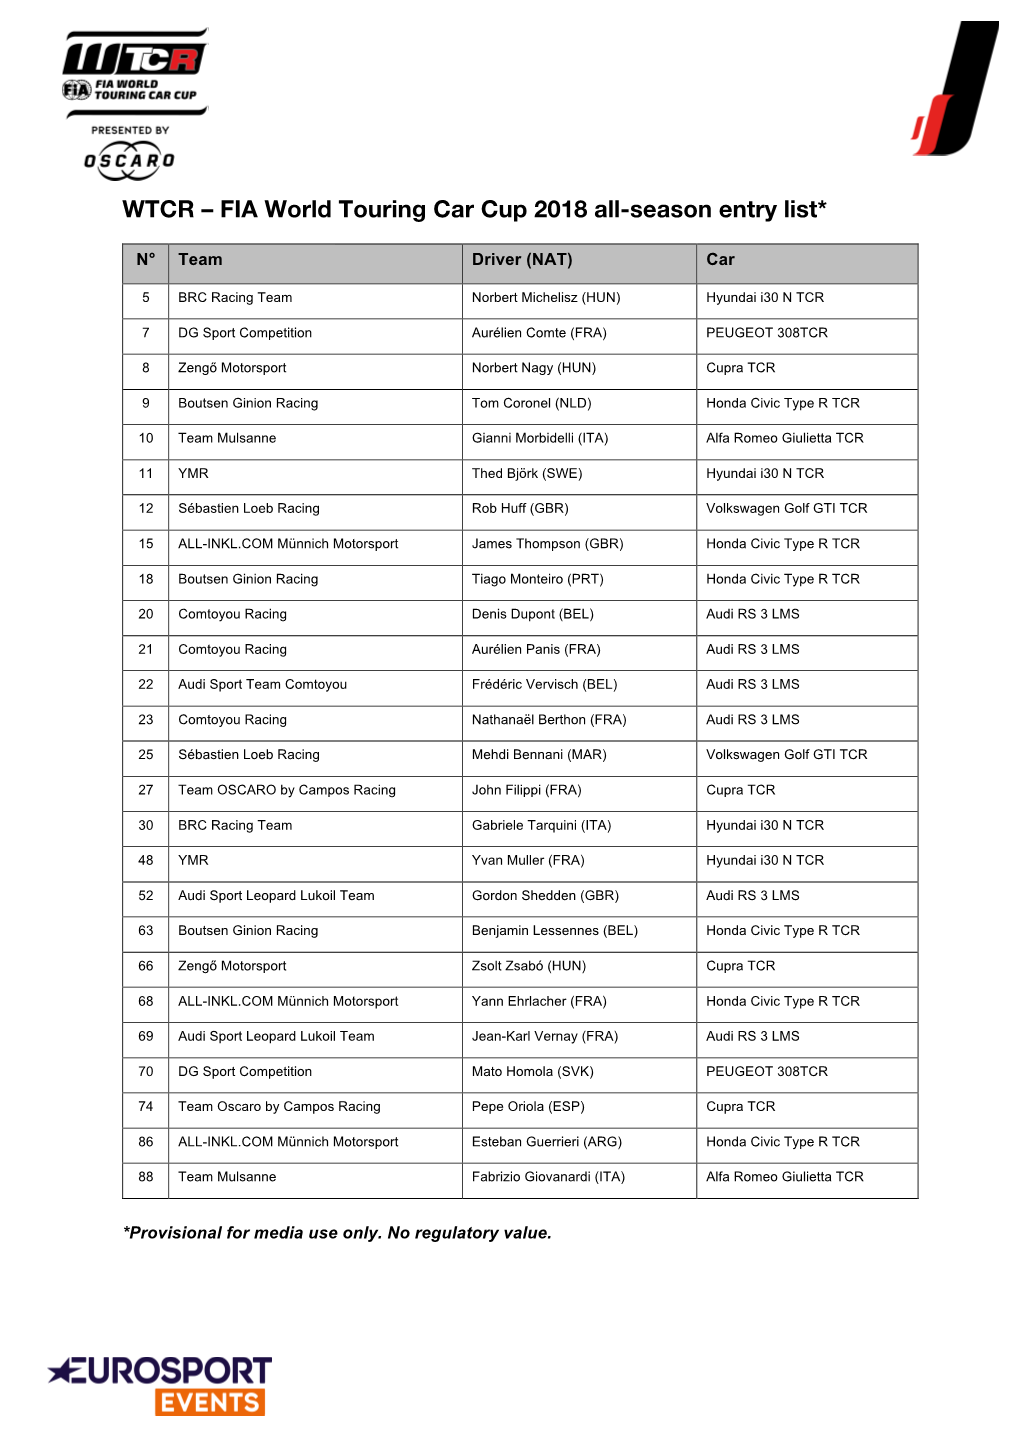 WTCR – FIA World Touring Car Cup 2018 All-Season Entry List*